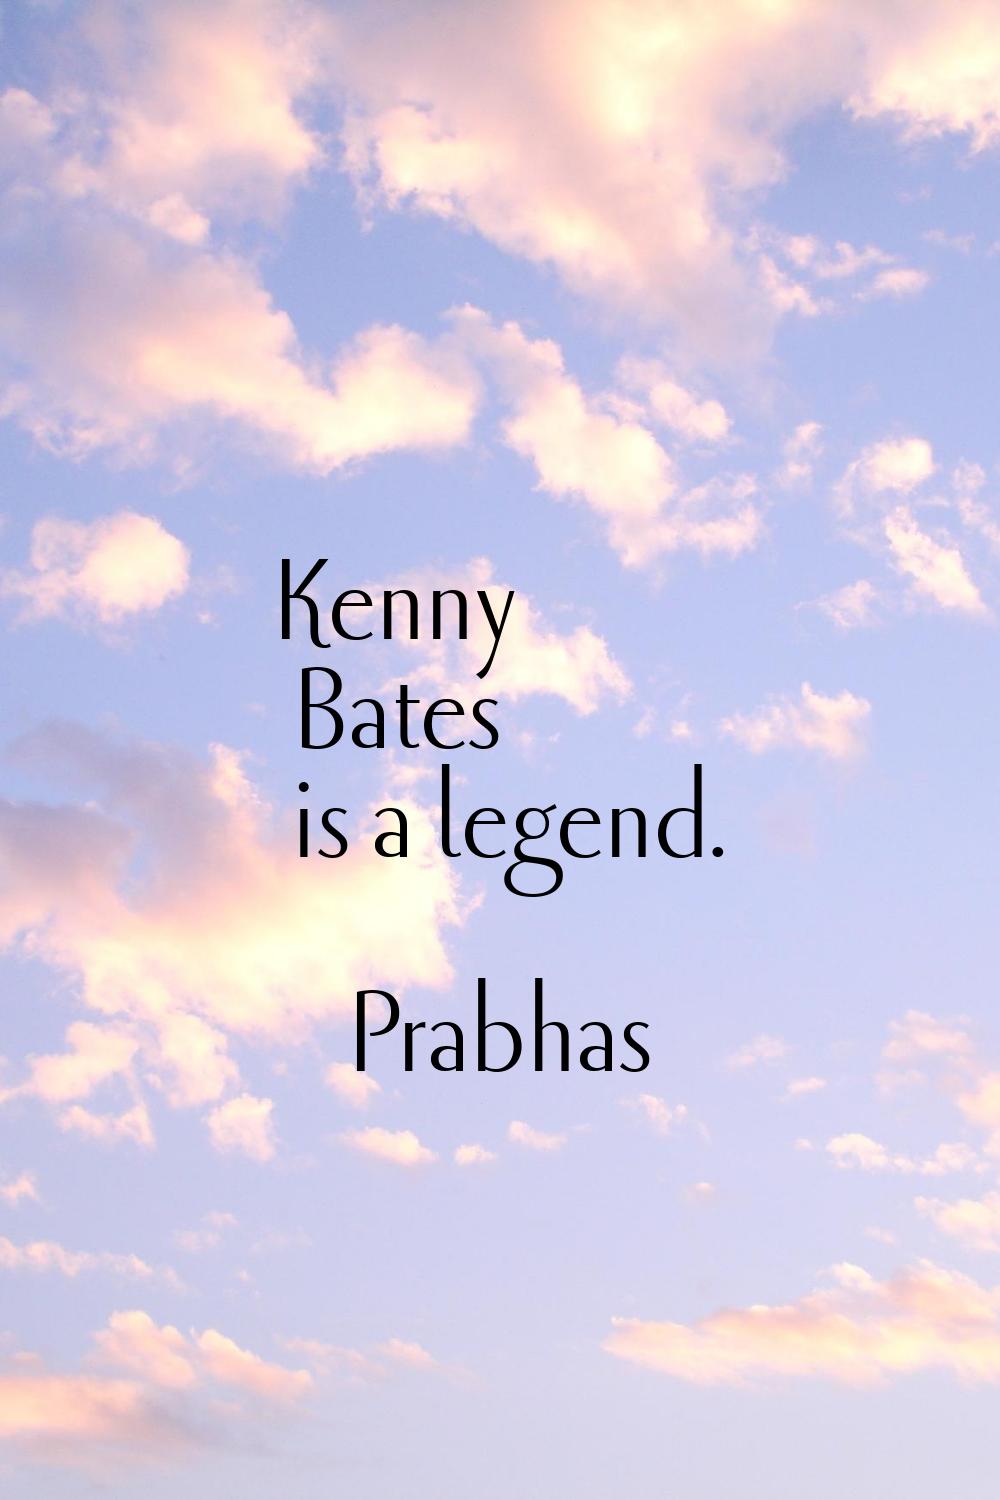 Kenny Bates is a legend.